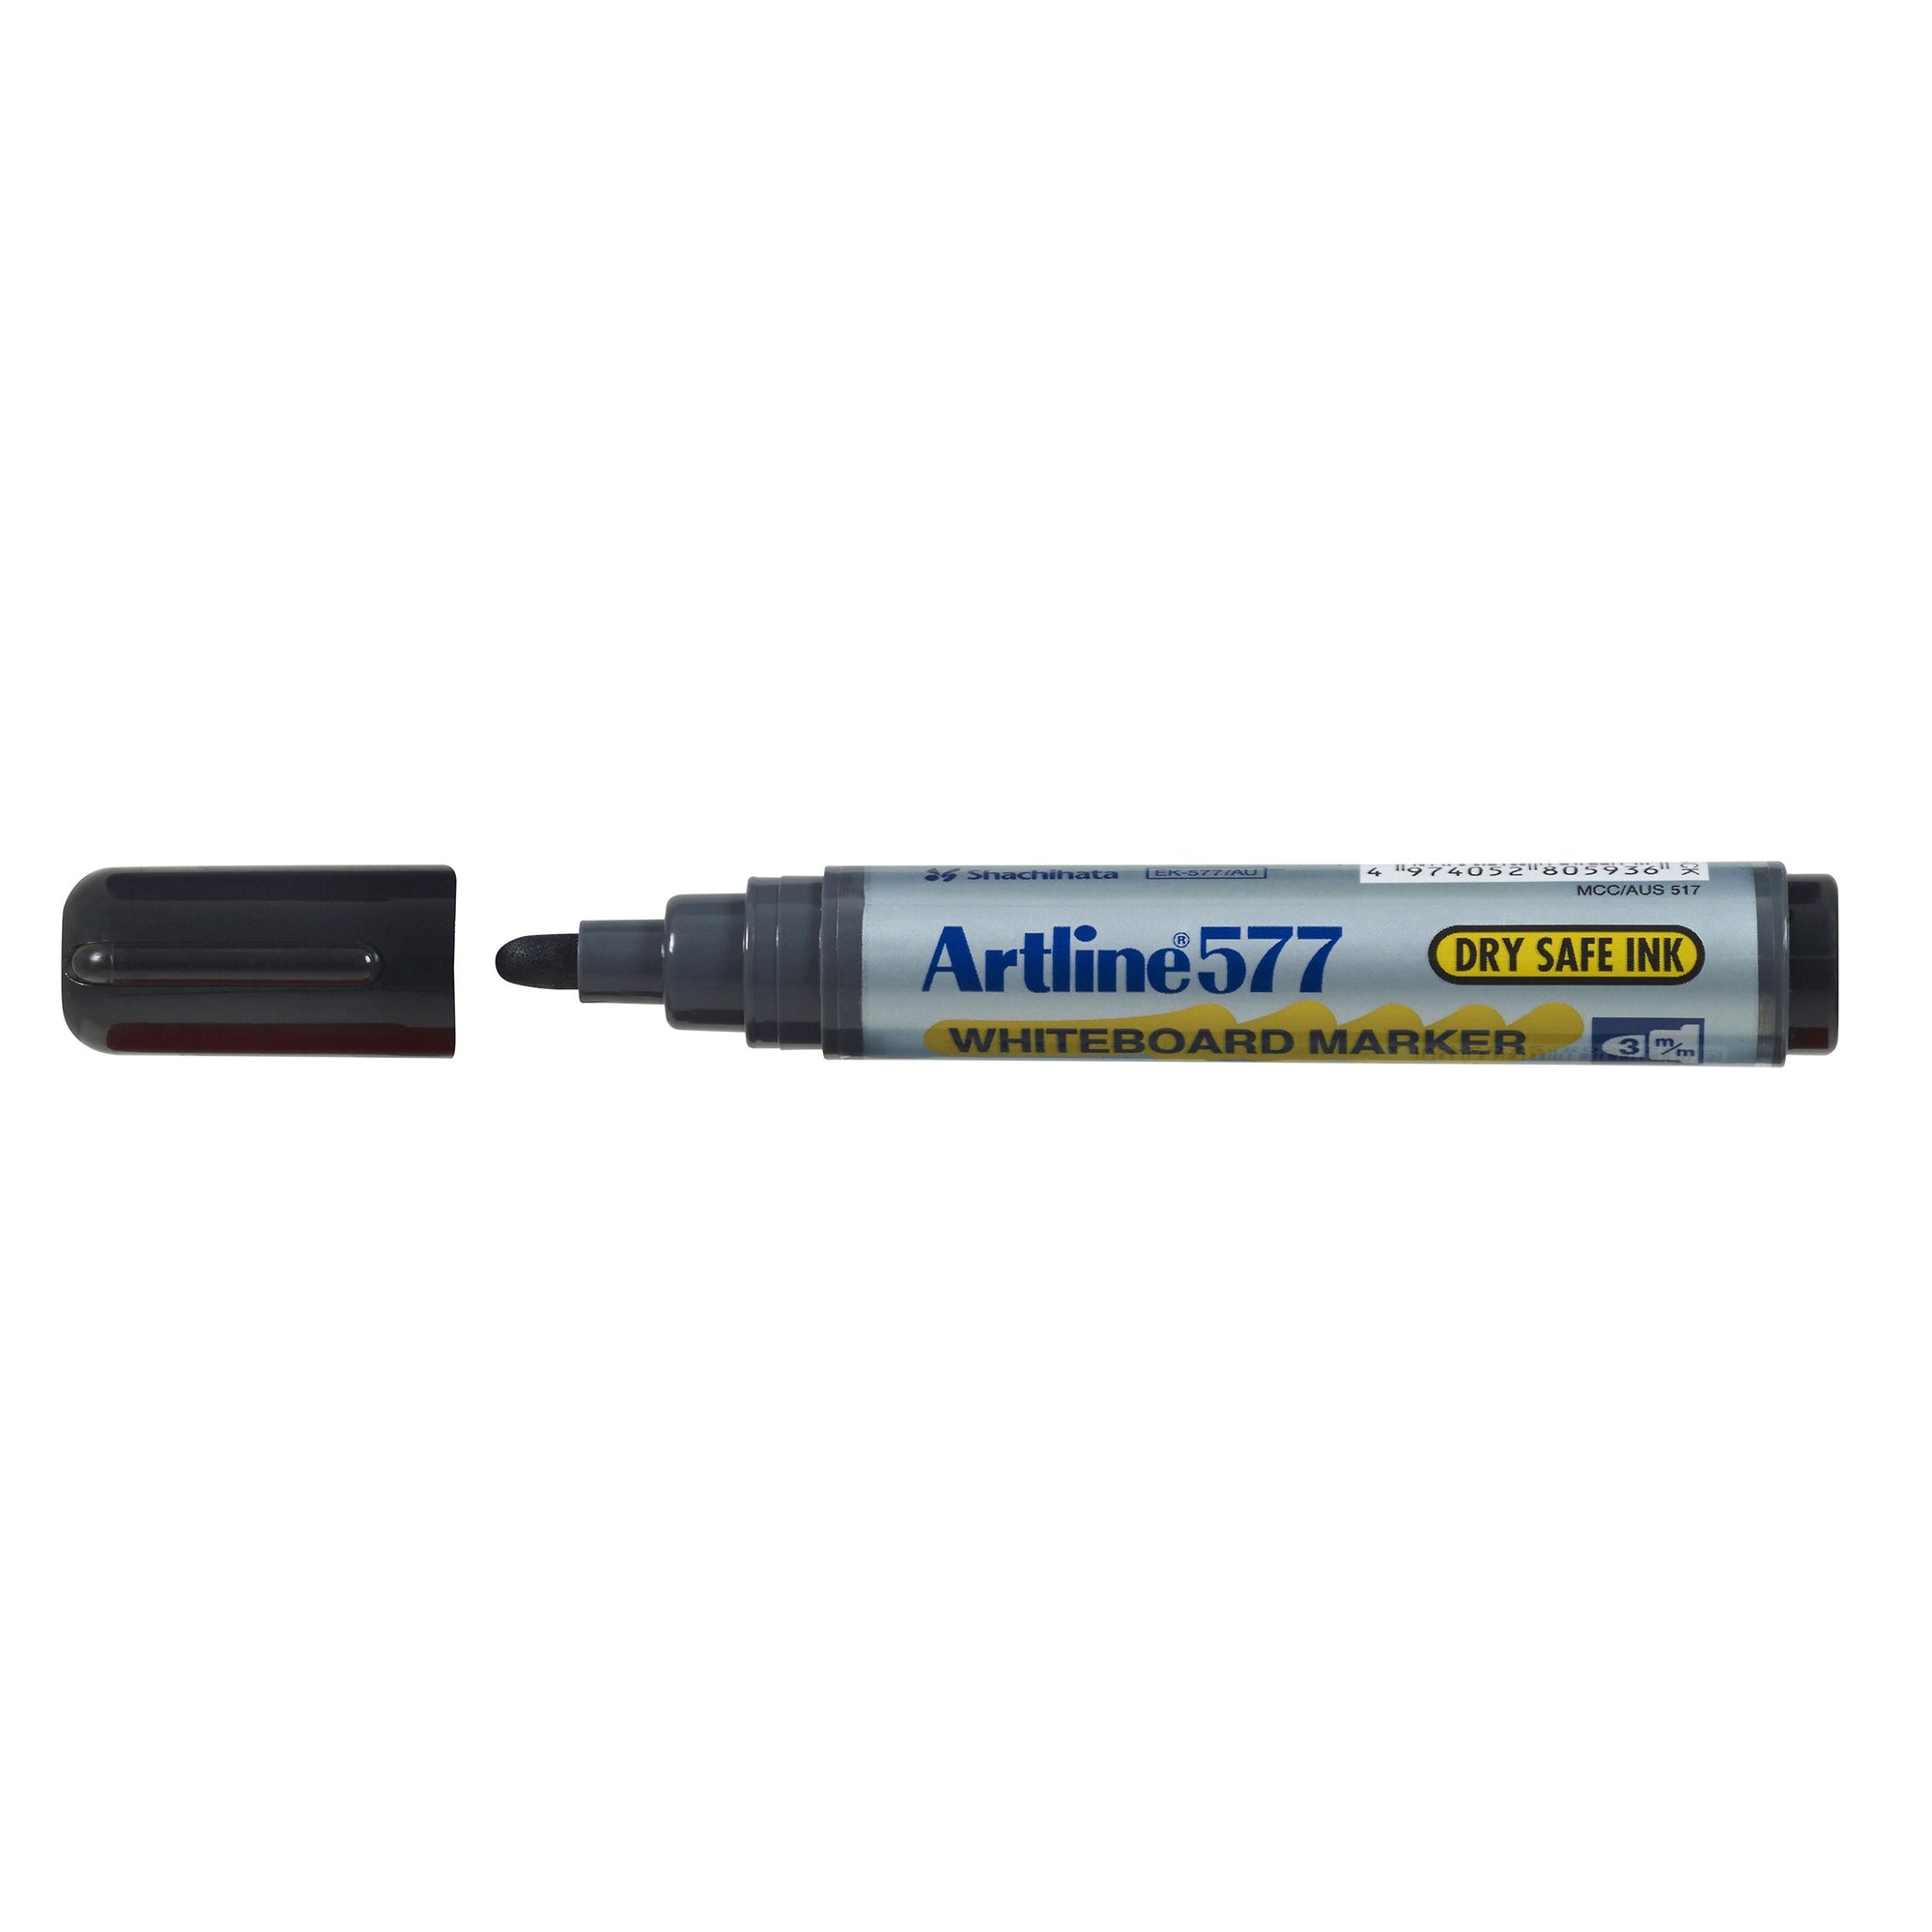 Artline 577 Whiteboard Marker Black 3.0mm